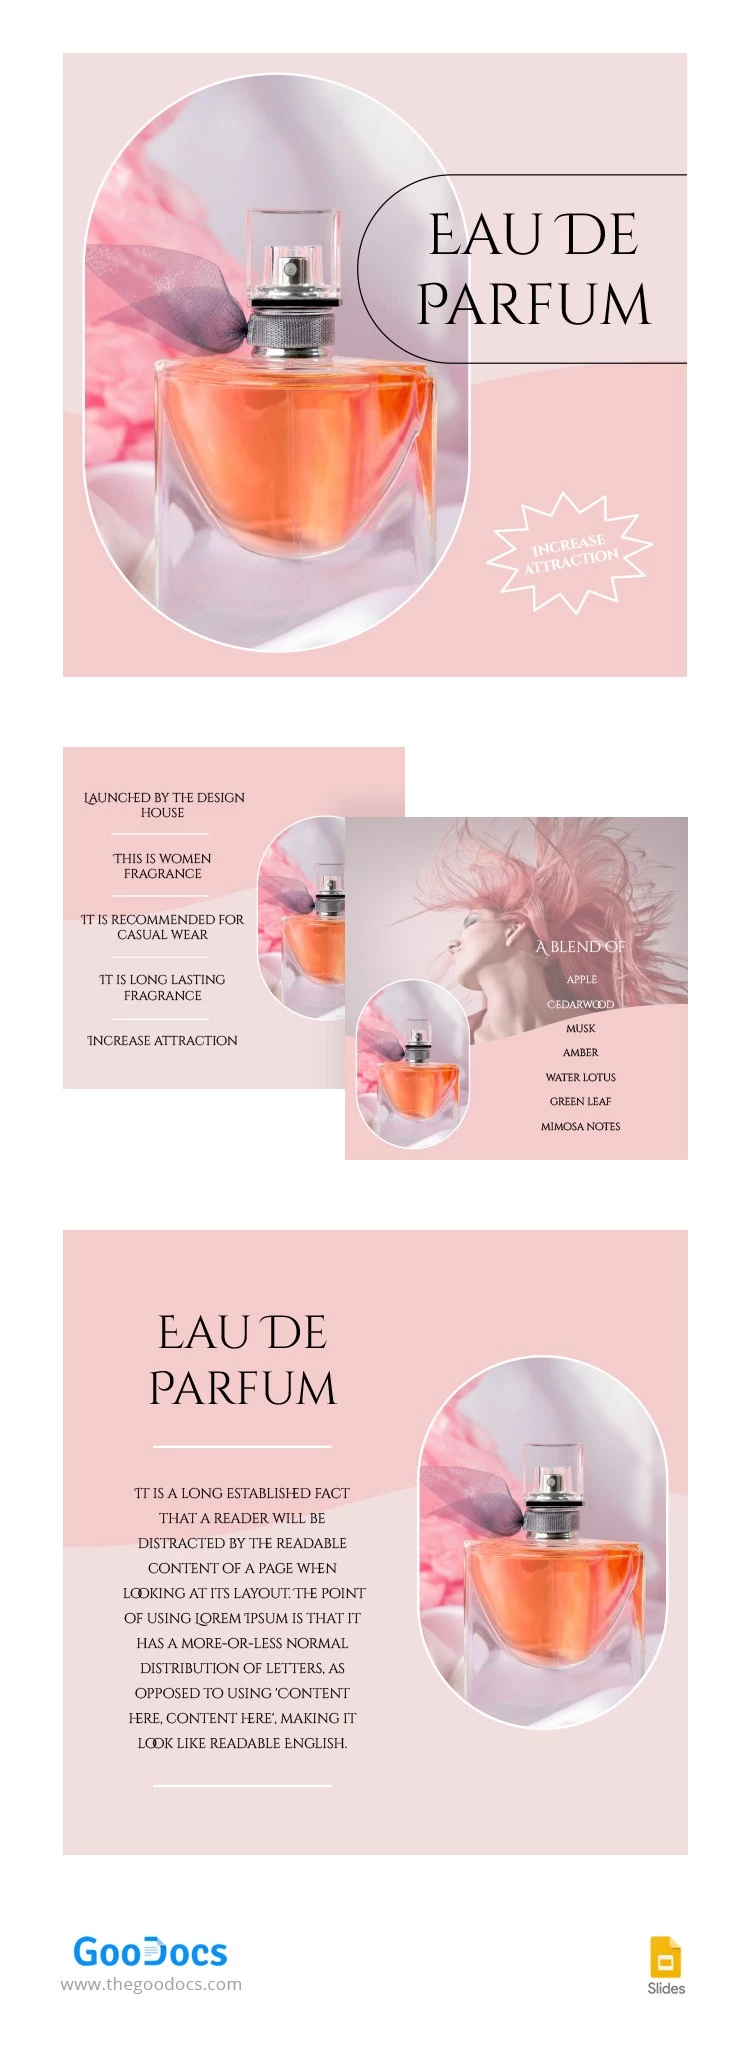 Atractiva Eau De Parfum Producto de Amazon. - free Google Docs Template - 10063849